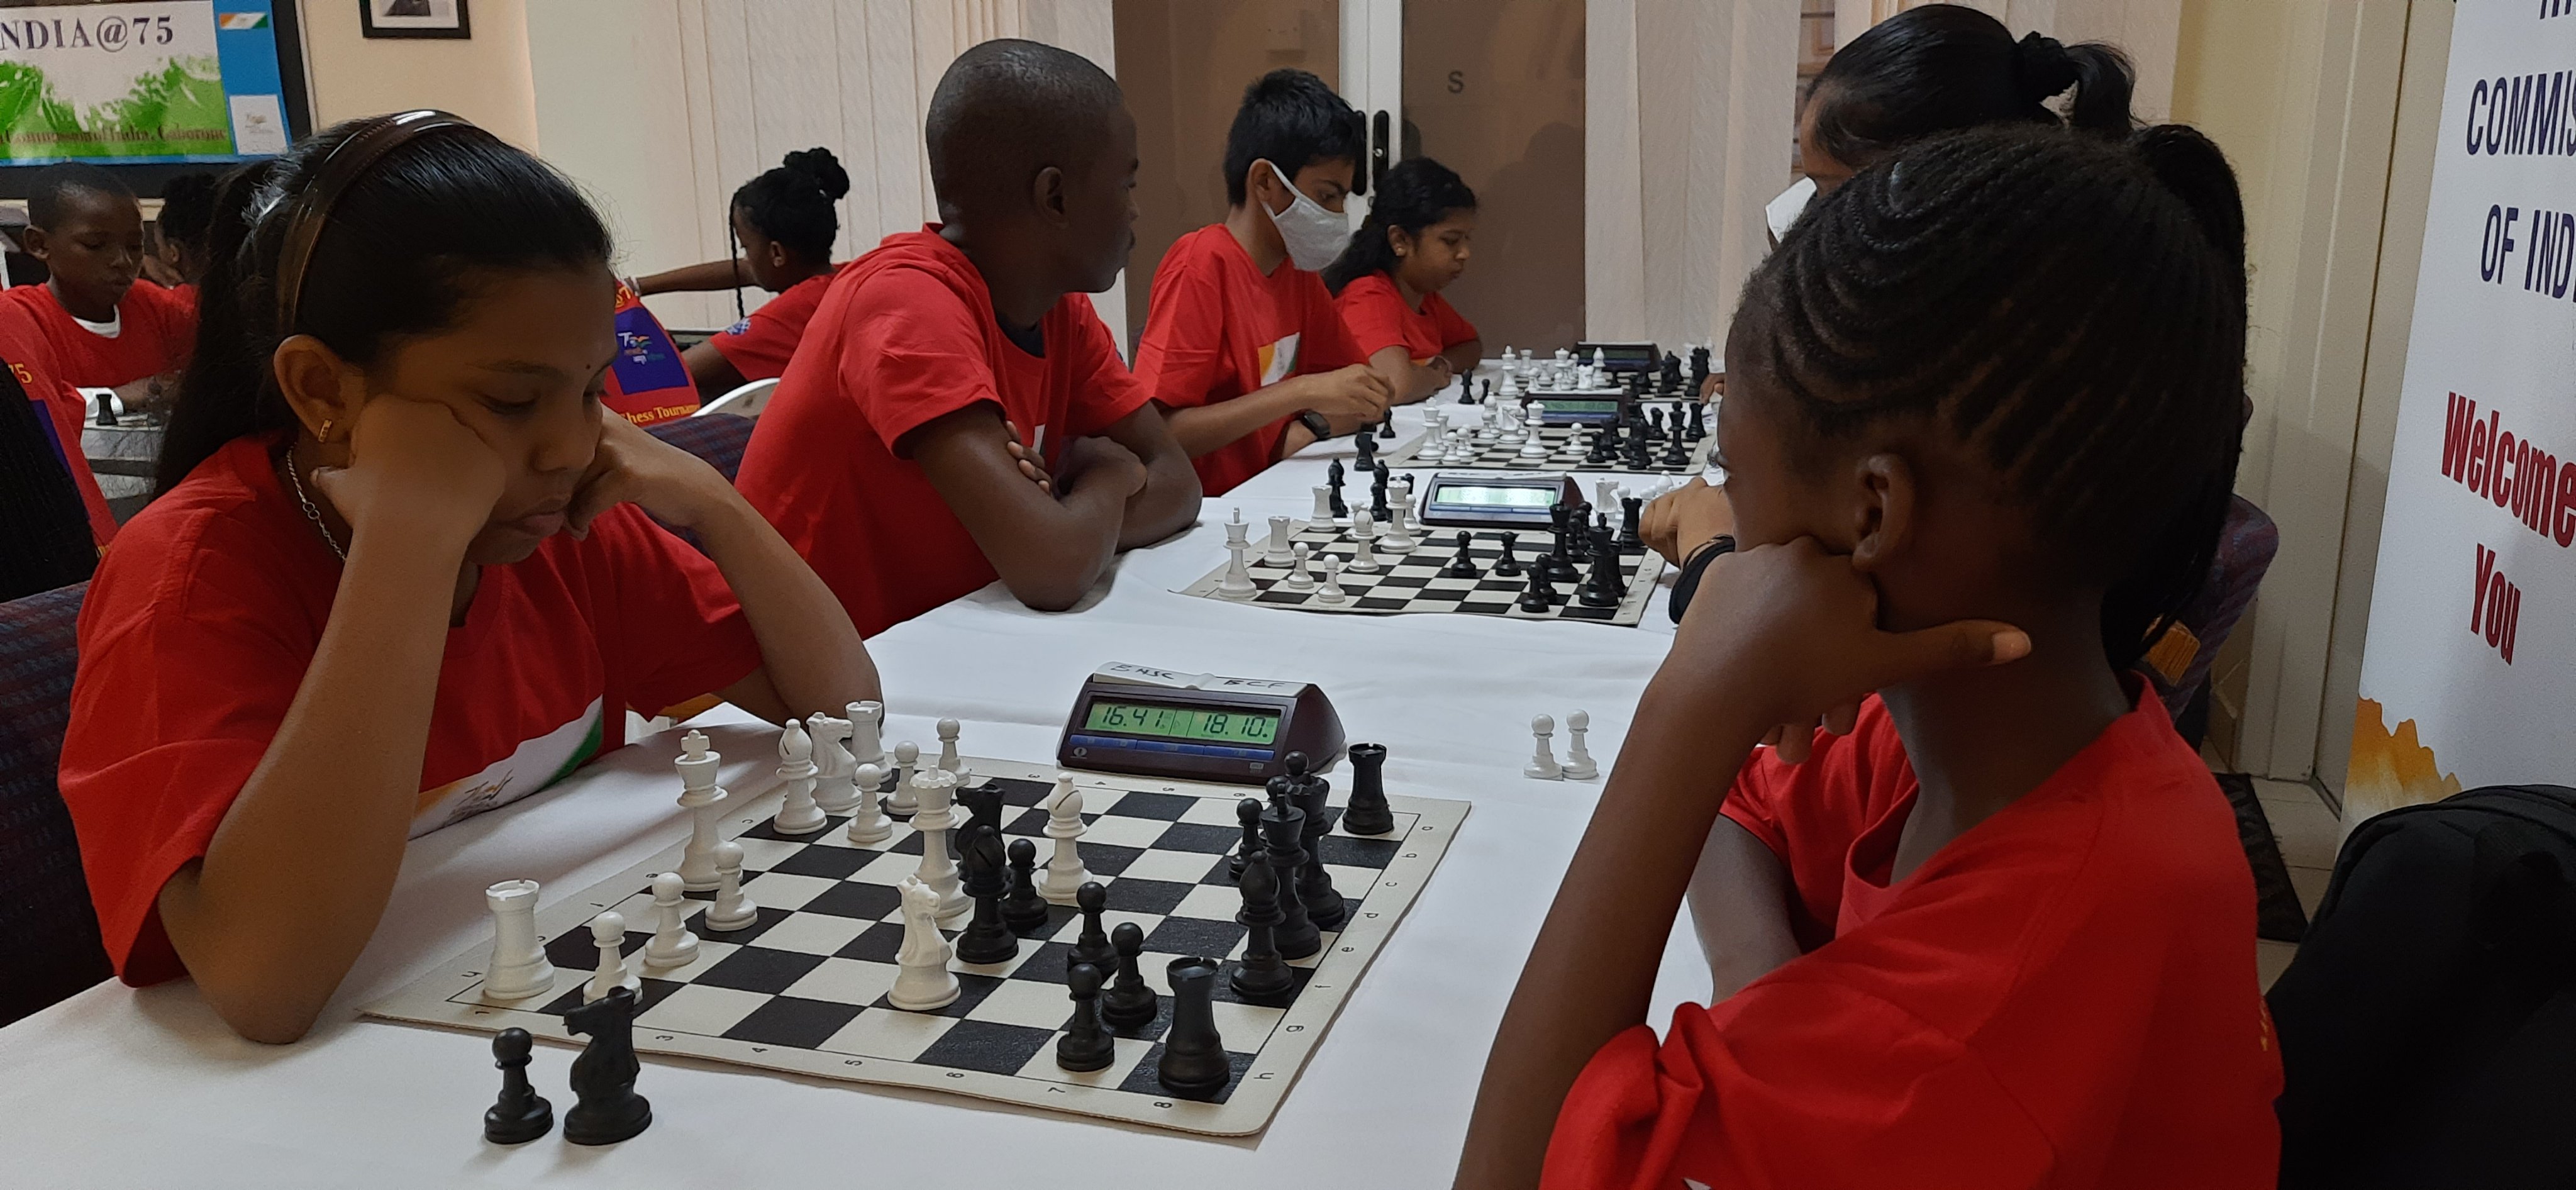 India@75 Chess Tournament